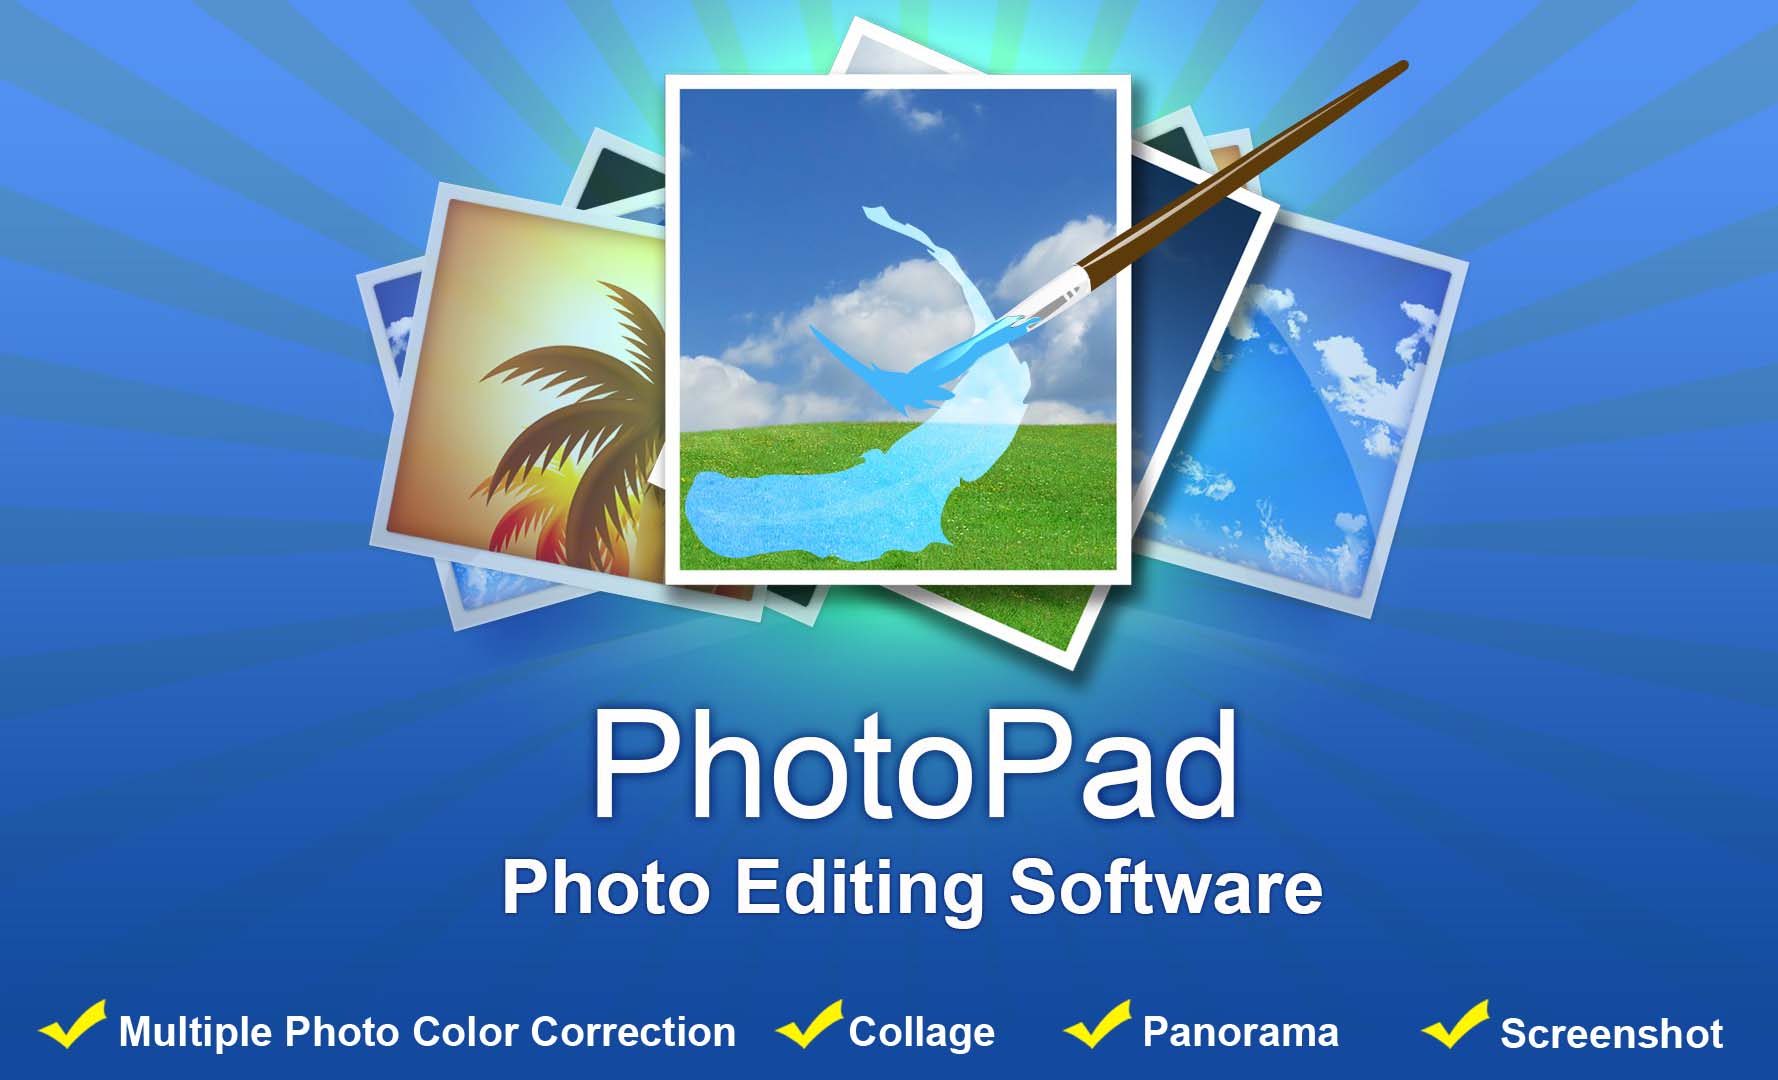 PhotoPad Image Editor Pro 3.12 Free Download